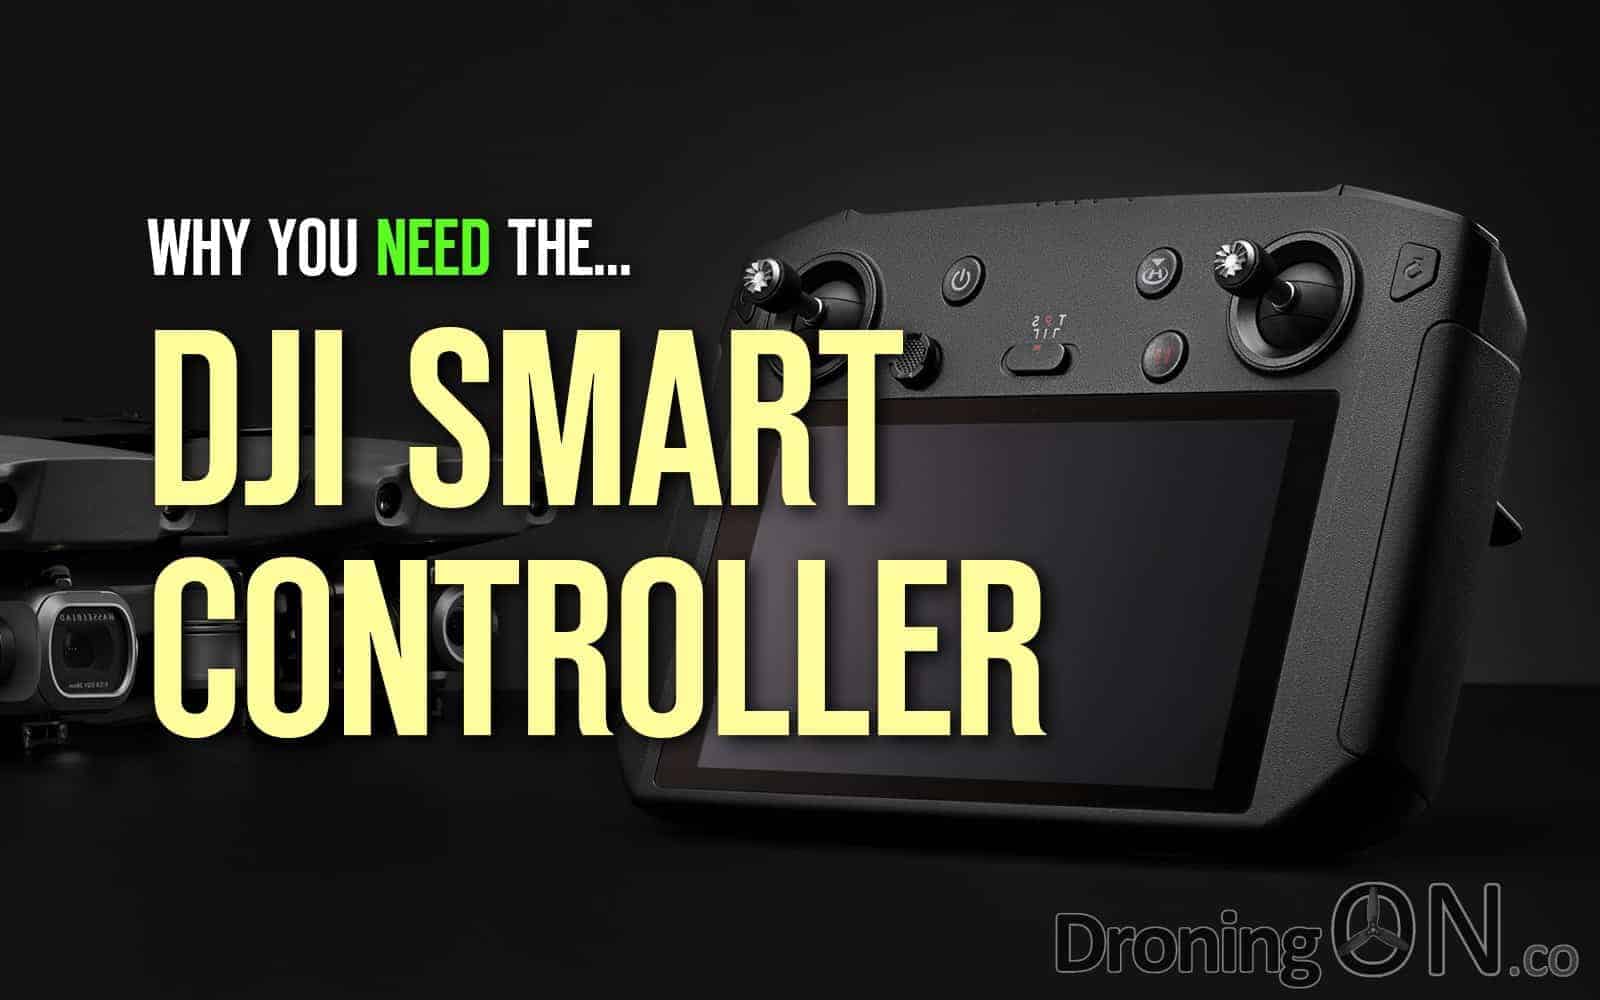 The new DJI Smart Controller for the Mavic drone range.